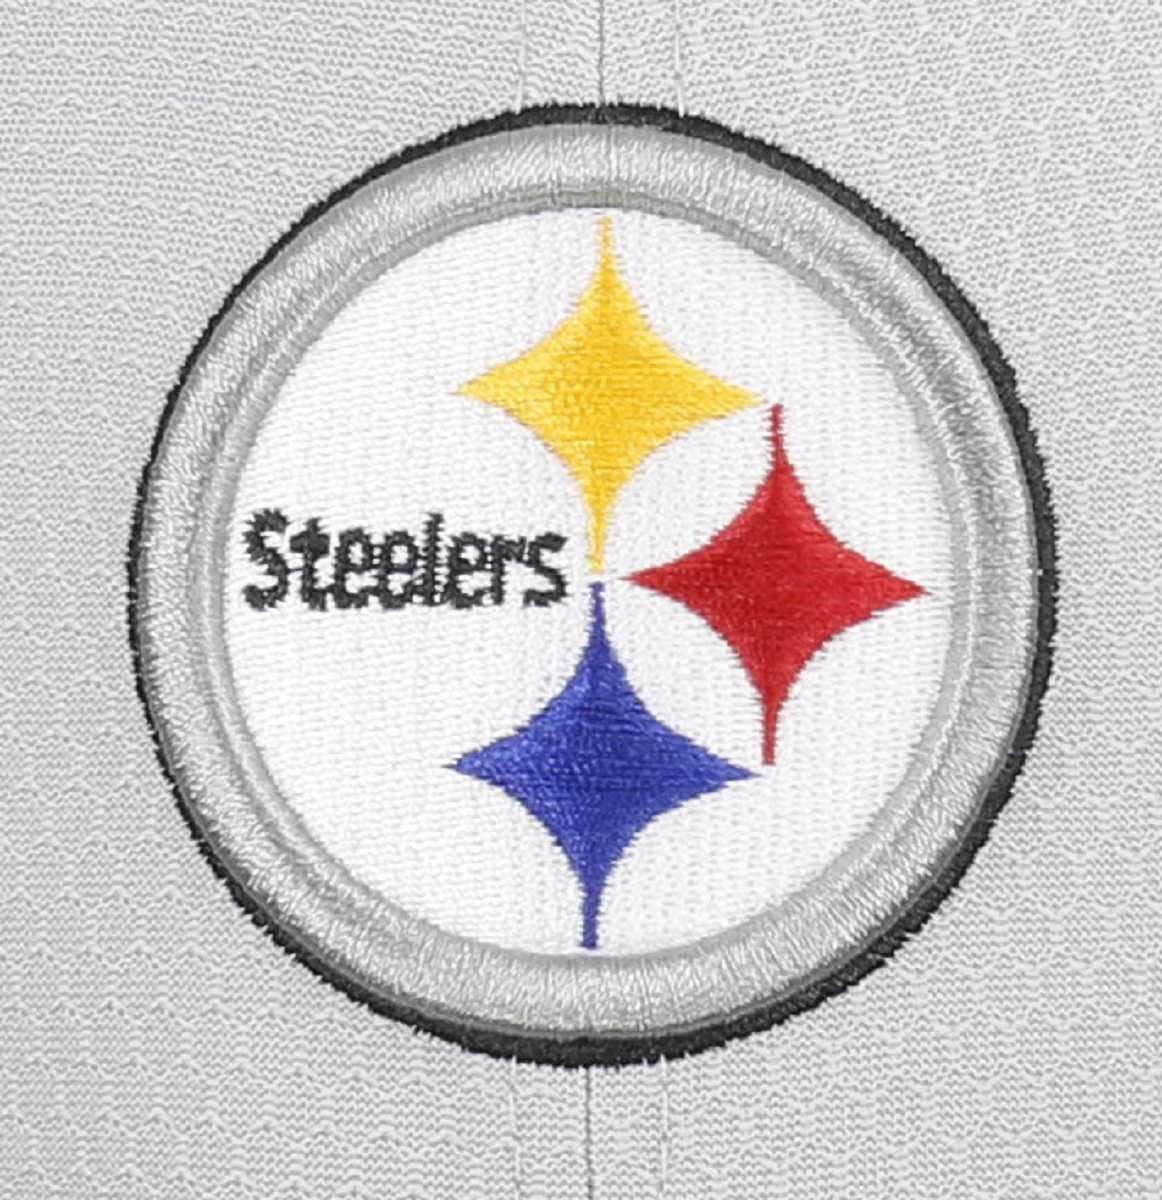 Pittsburgh Steelers NFL Sideline 2017 39Thirty Cap New Era